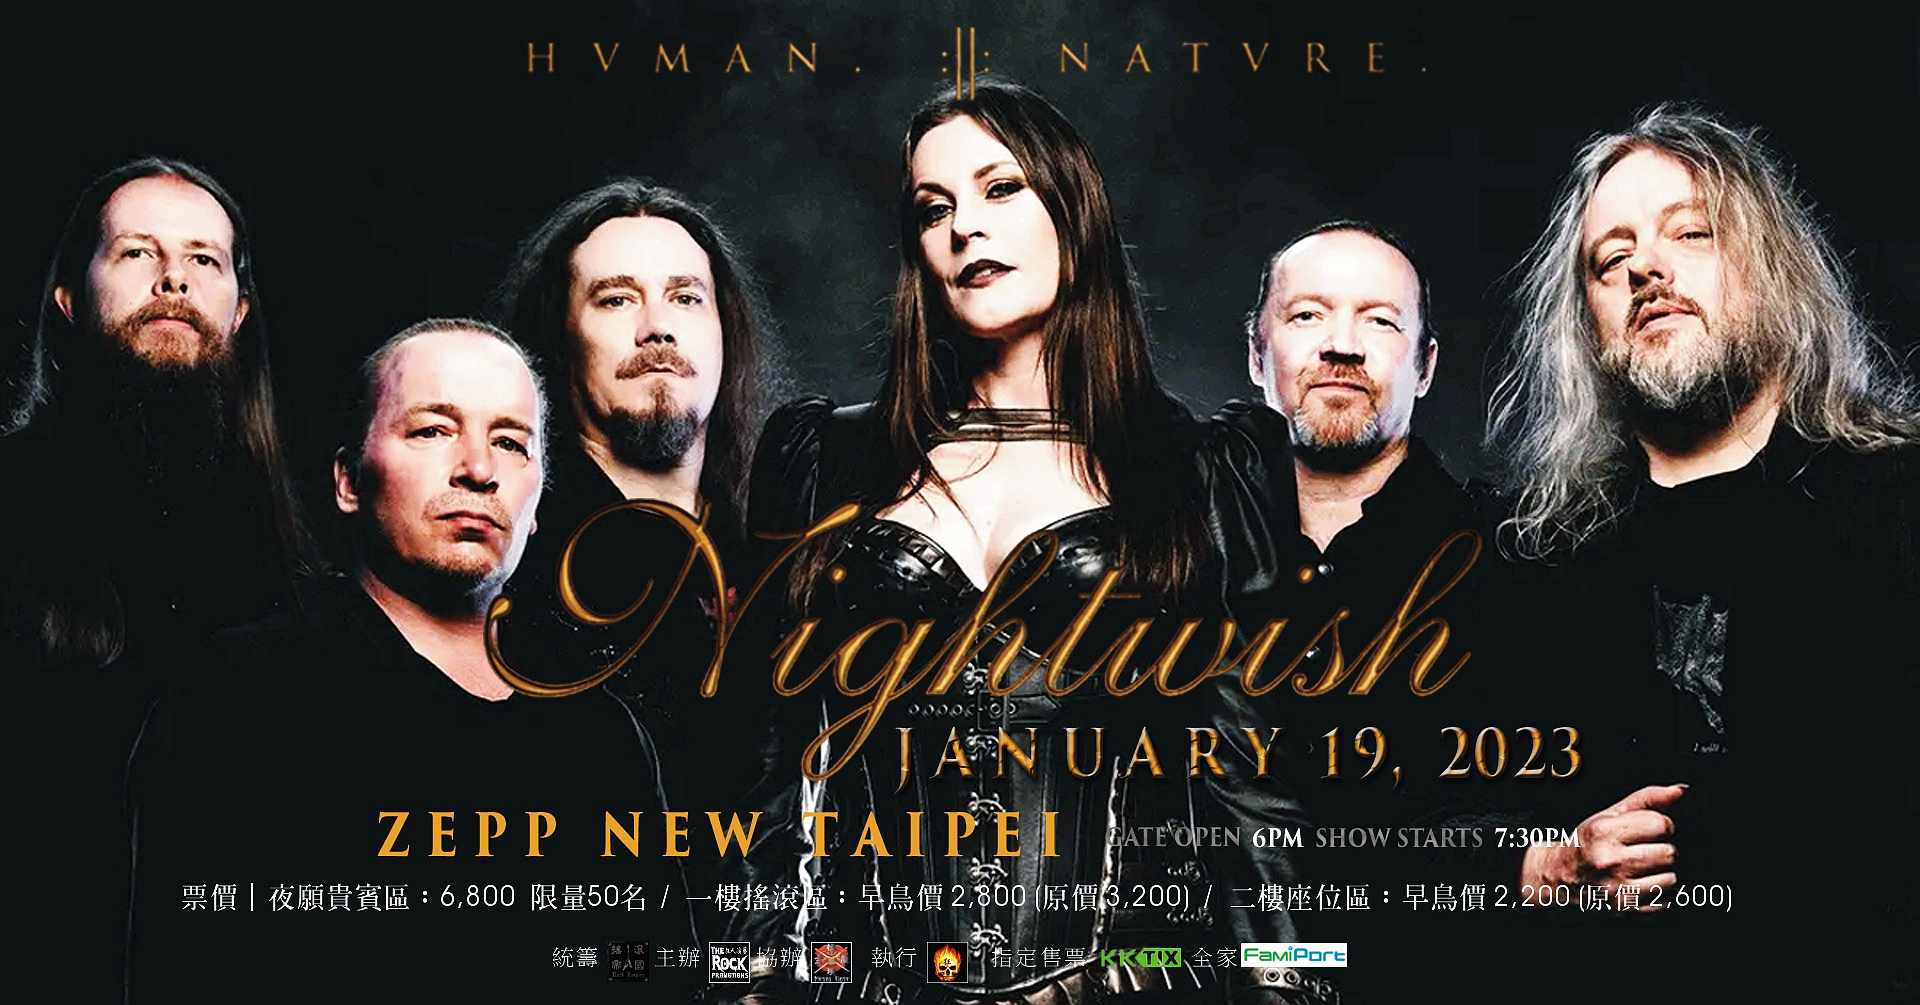 nightwish on tour